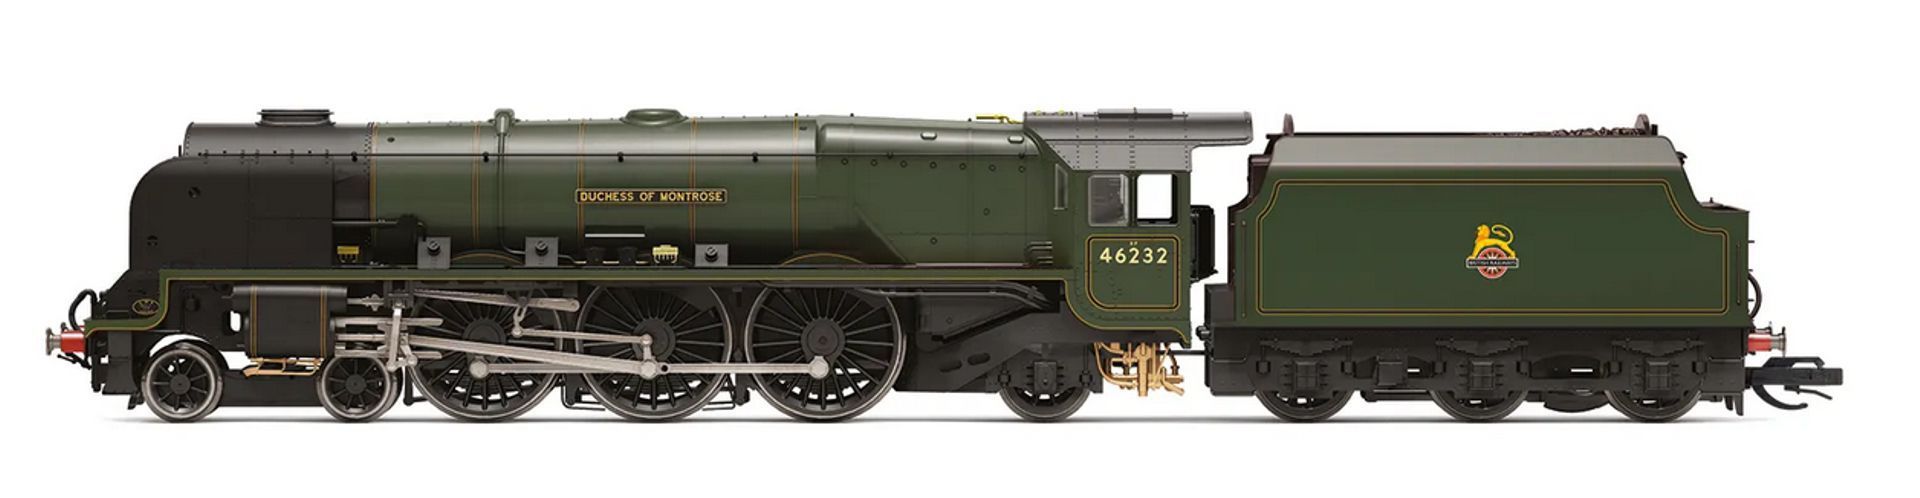 Hornby TT3011TXSM - Dampflok BR, Princess Coronation, 4-6-2, 46232, 'Duchess of Montrose', Ep.IV, DC-Sound